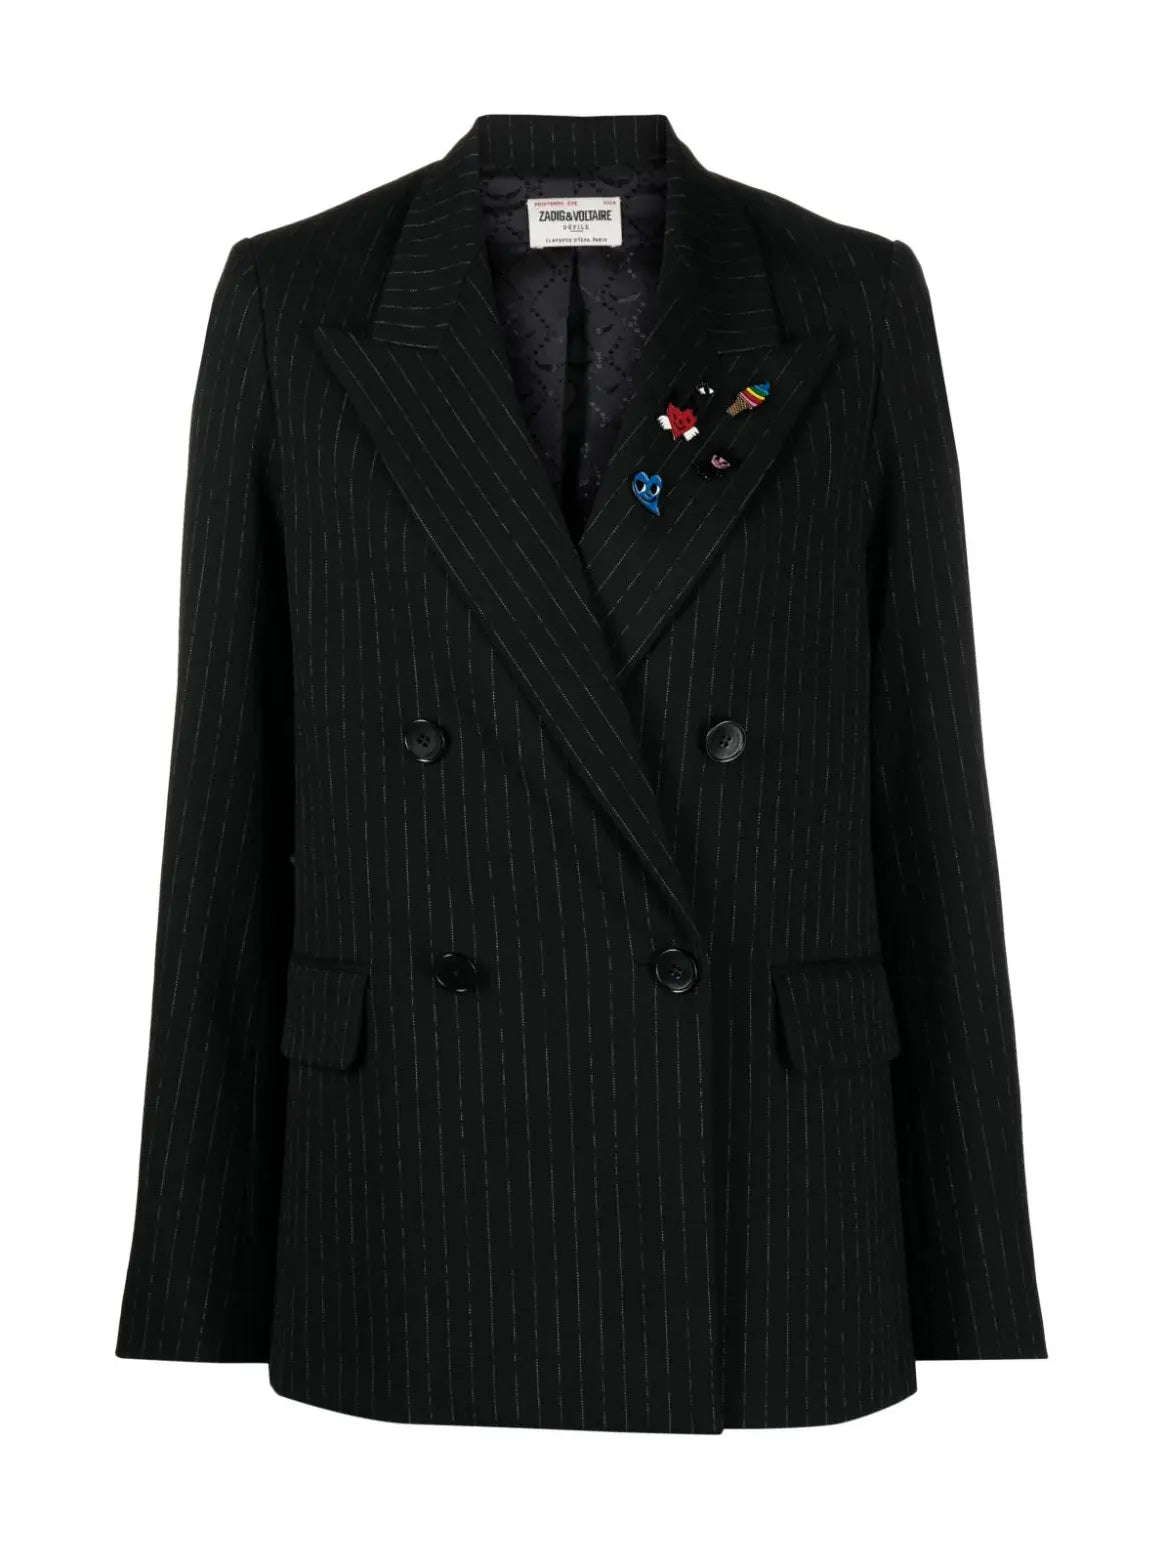 VALDO TAILLEUR PINSTRIPE blazer, black